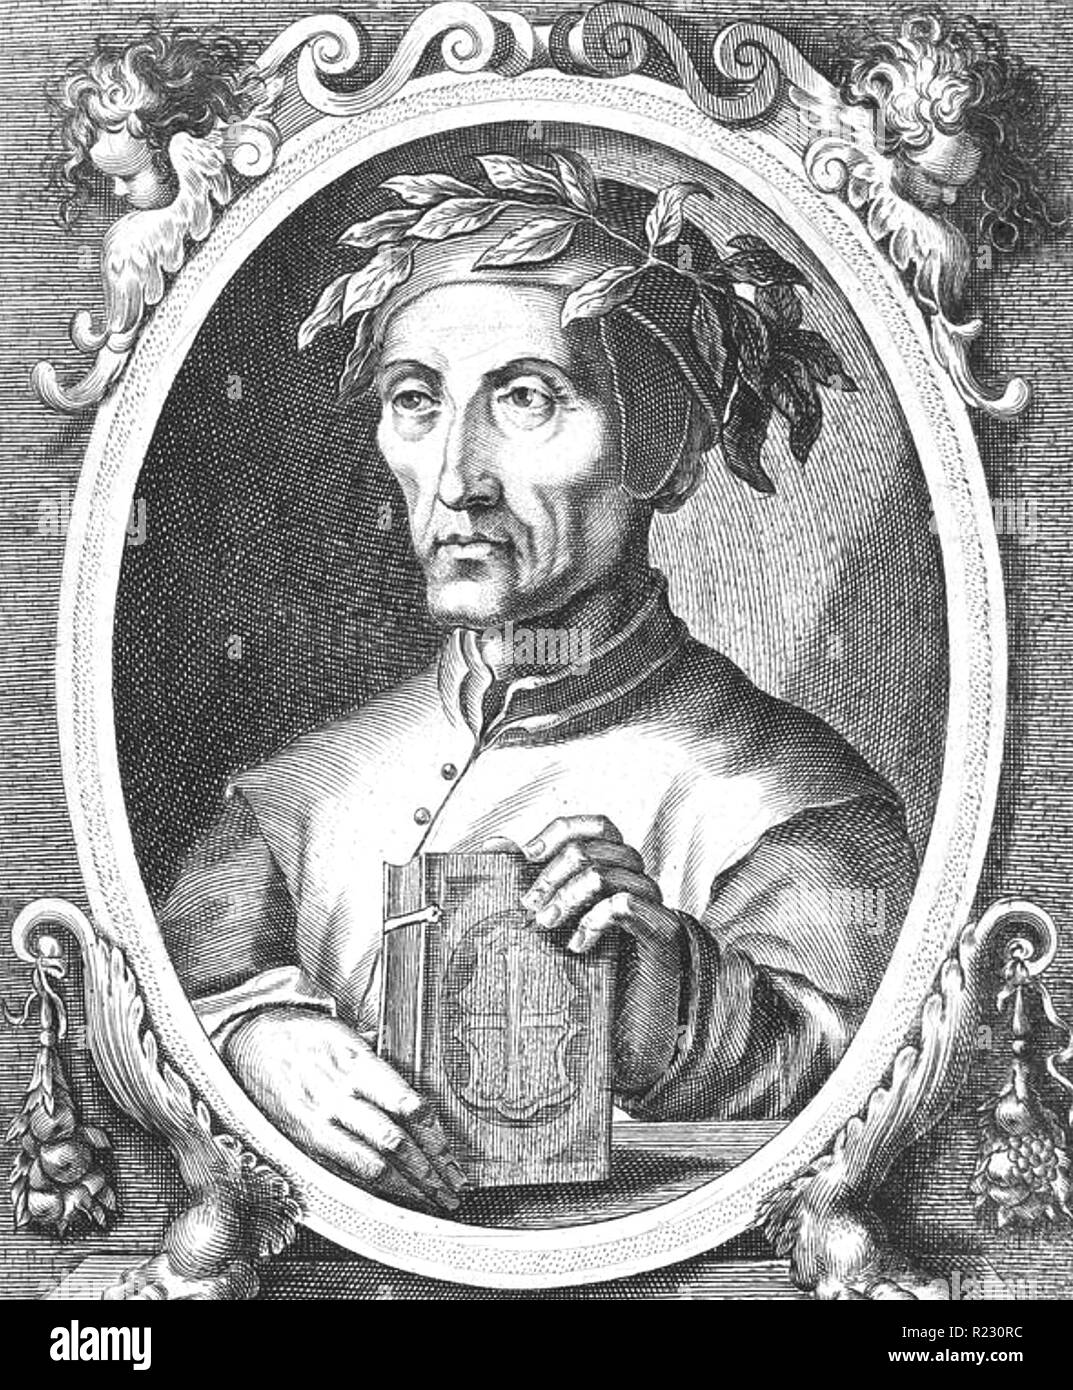 Jacopo Alighieri